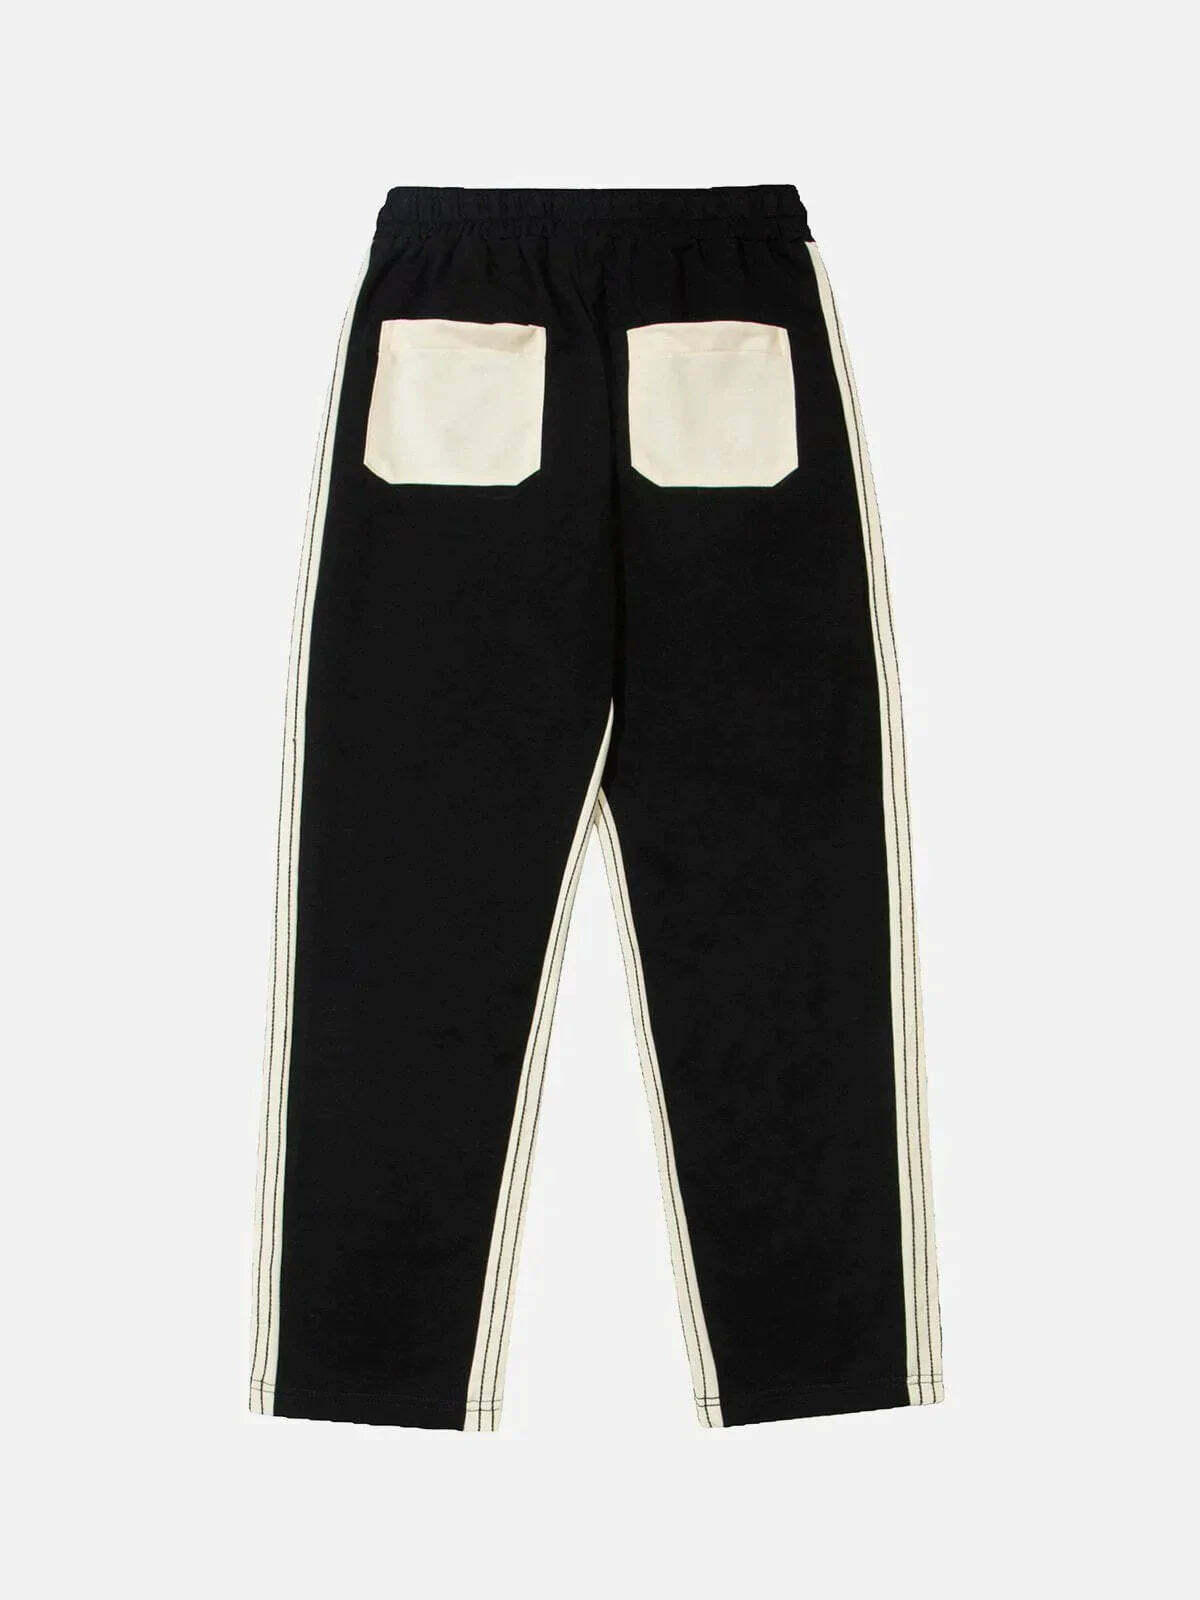 trendy terry sweatpants edgy sidestripe design 6675